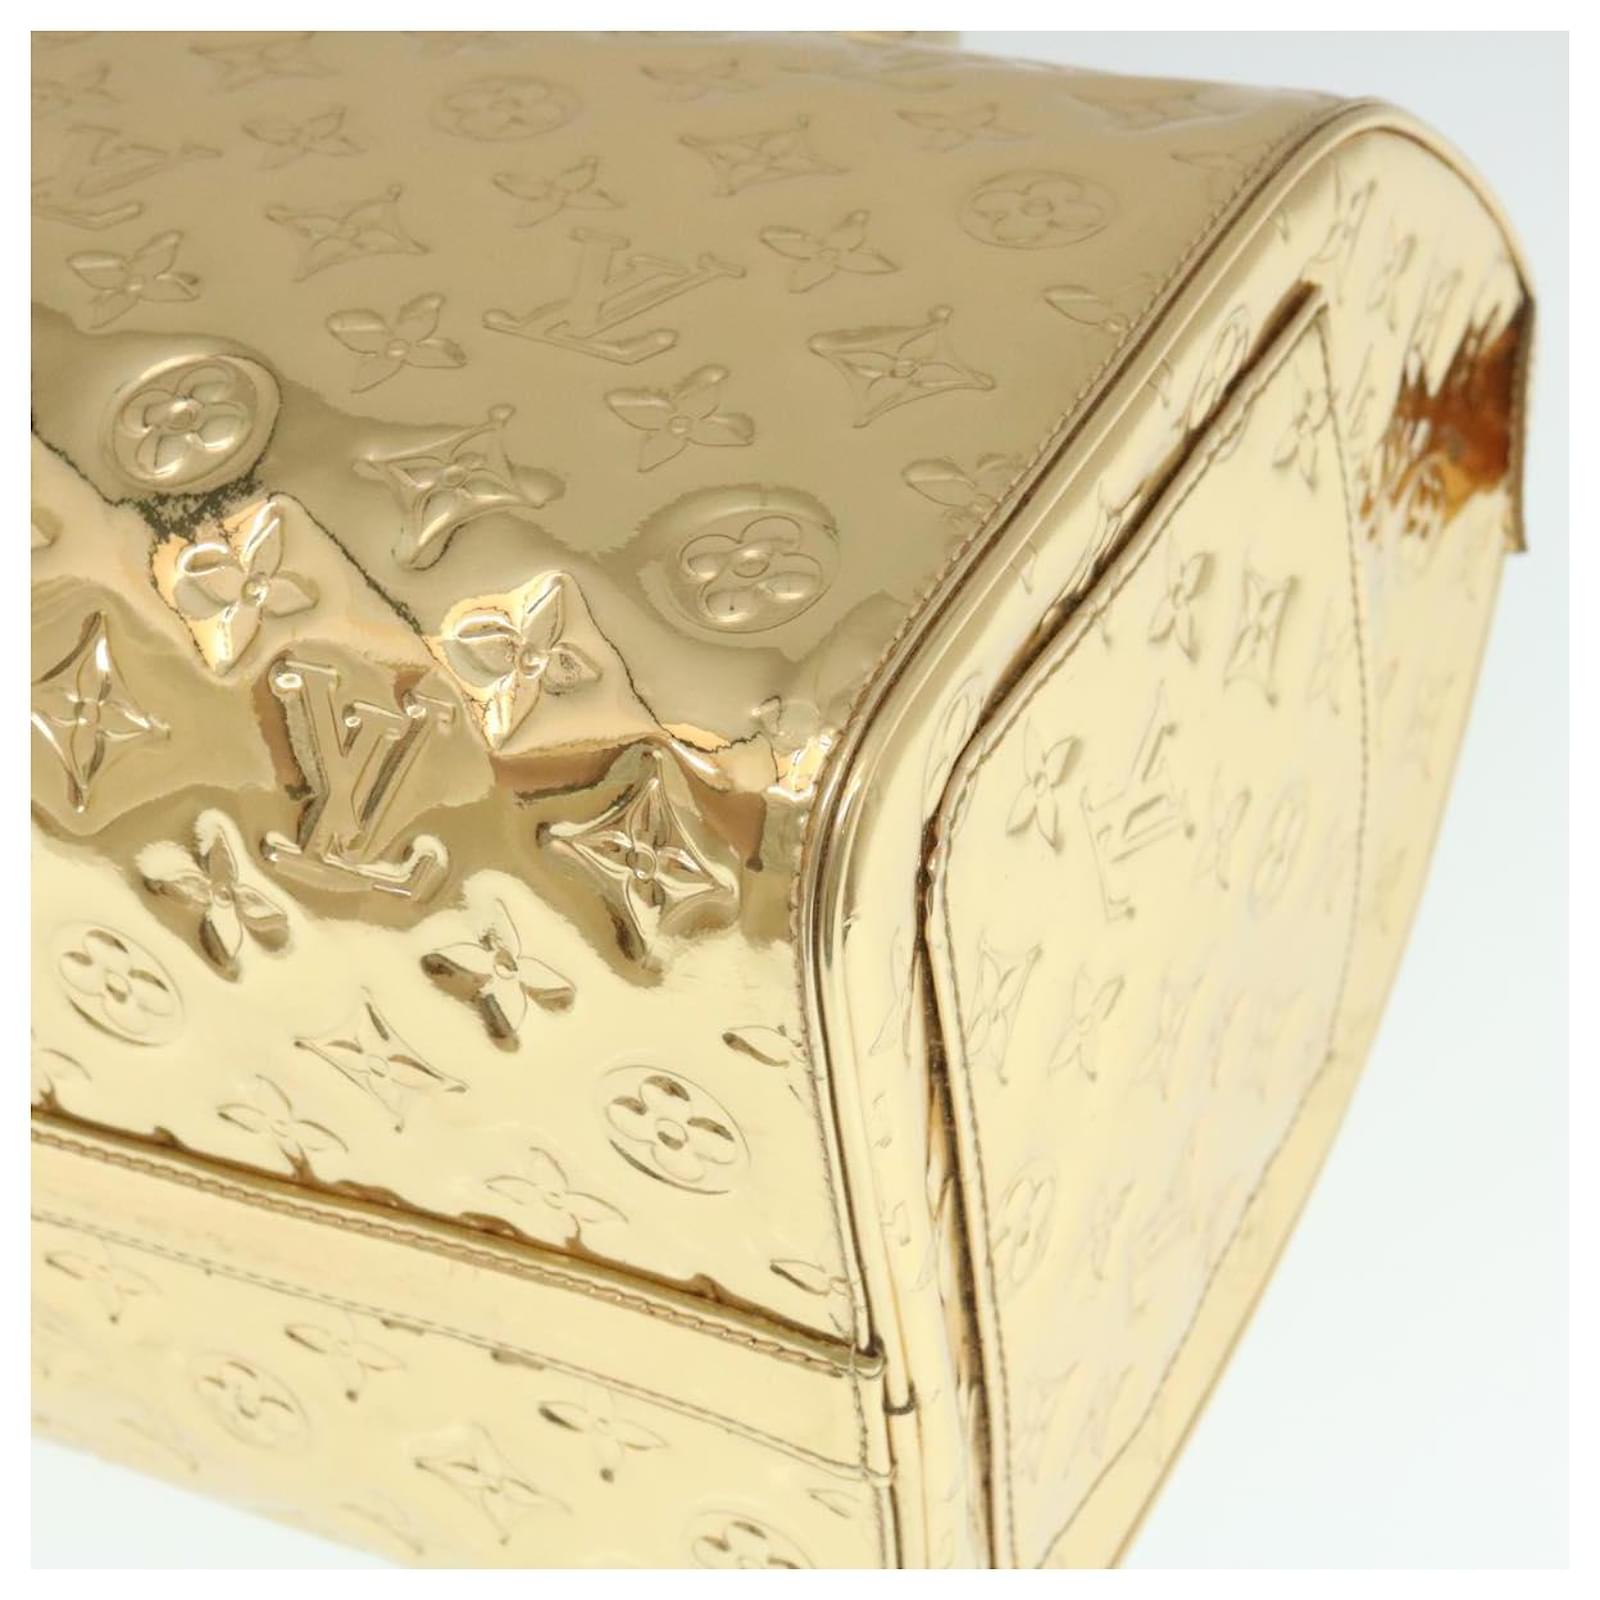 Louis Vuitton Gold Monogram Miroir Speedy 35 QJB0GCEFDB002